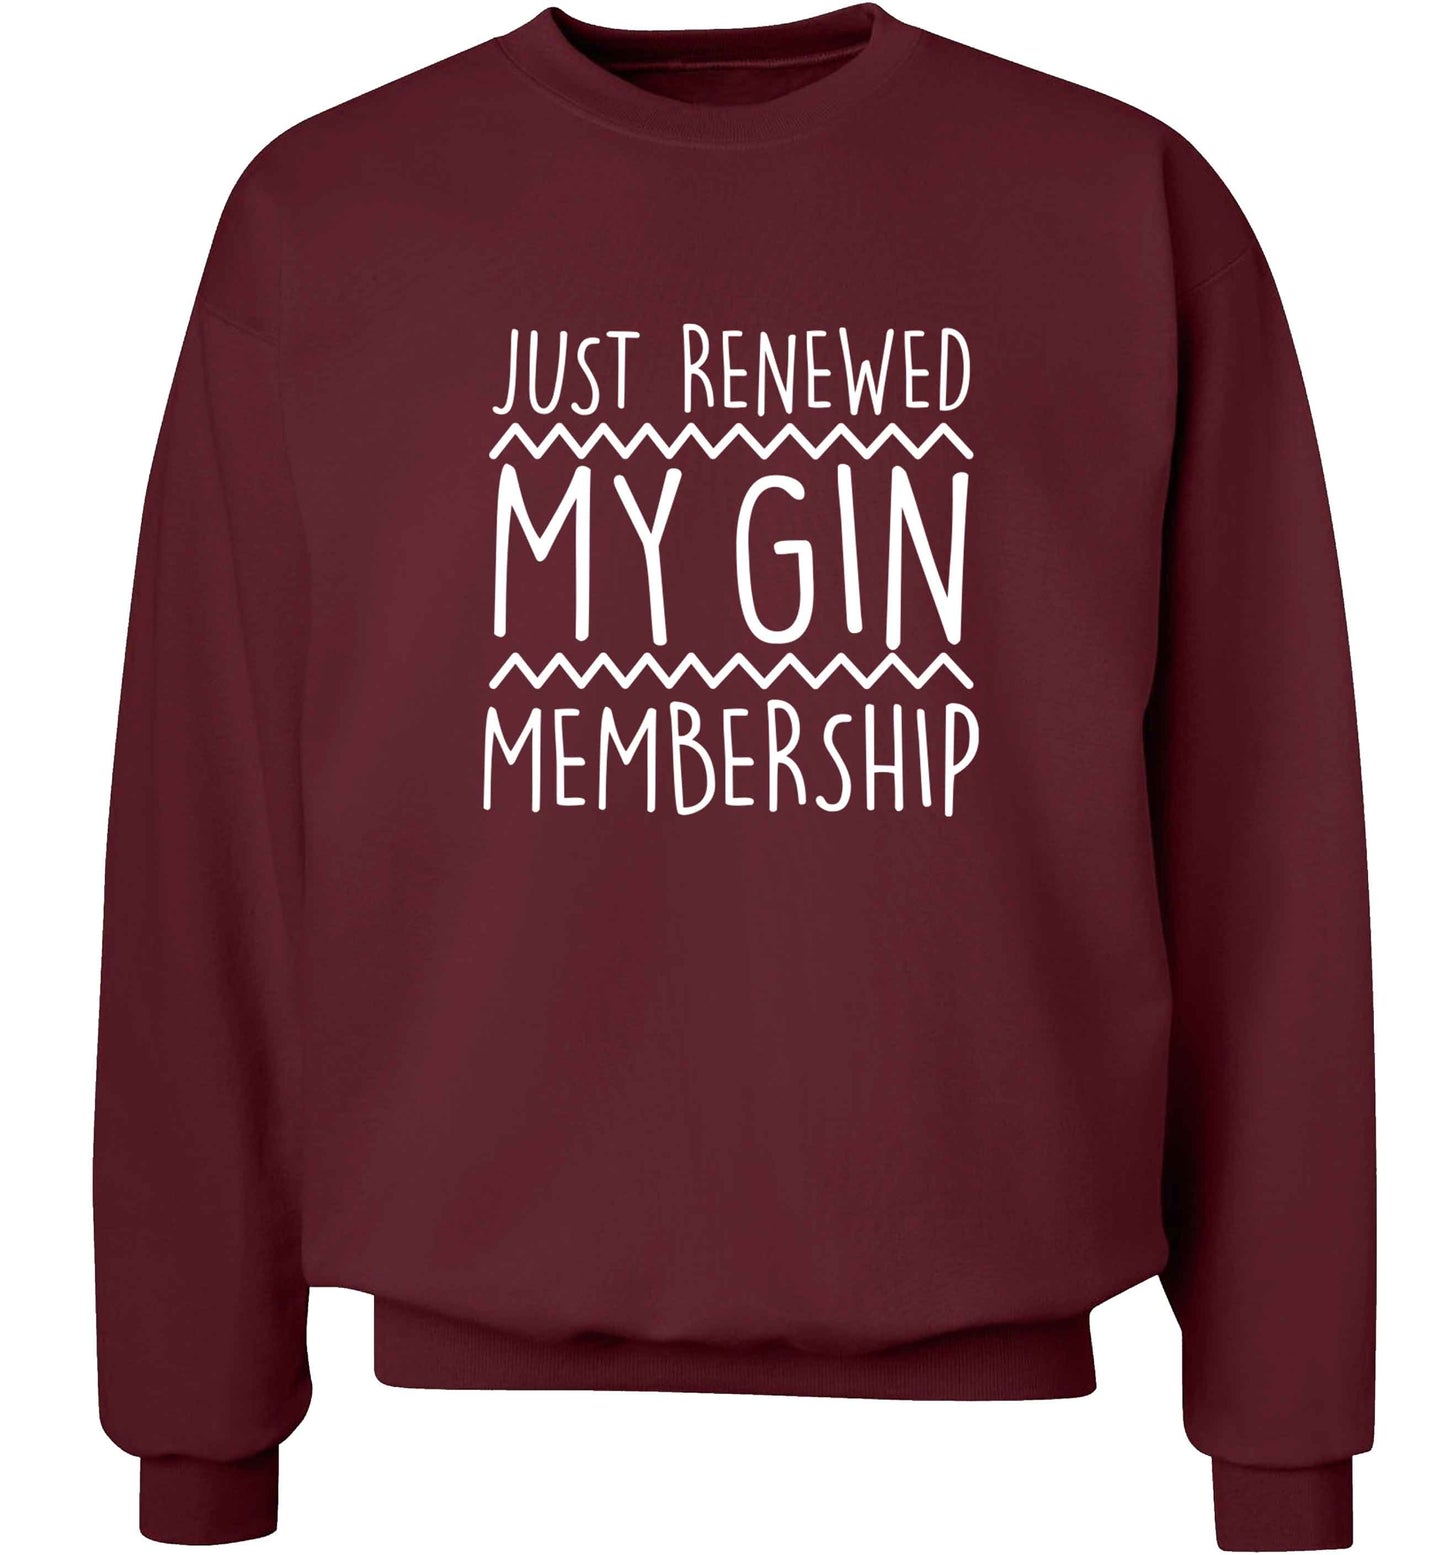 Just renewed my gin membership adult's unisex maroon sweater 2XL